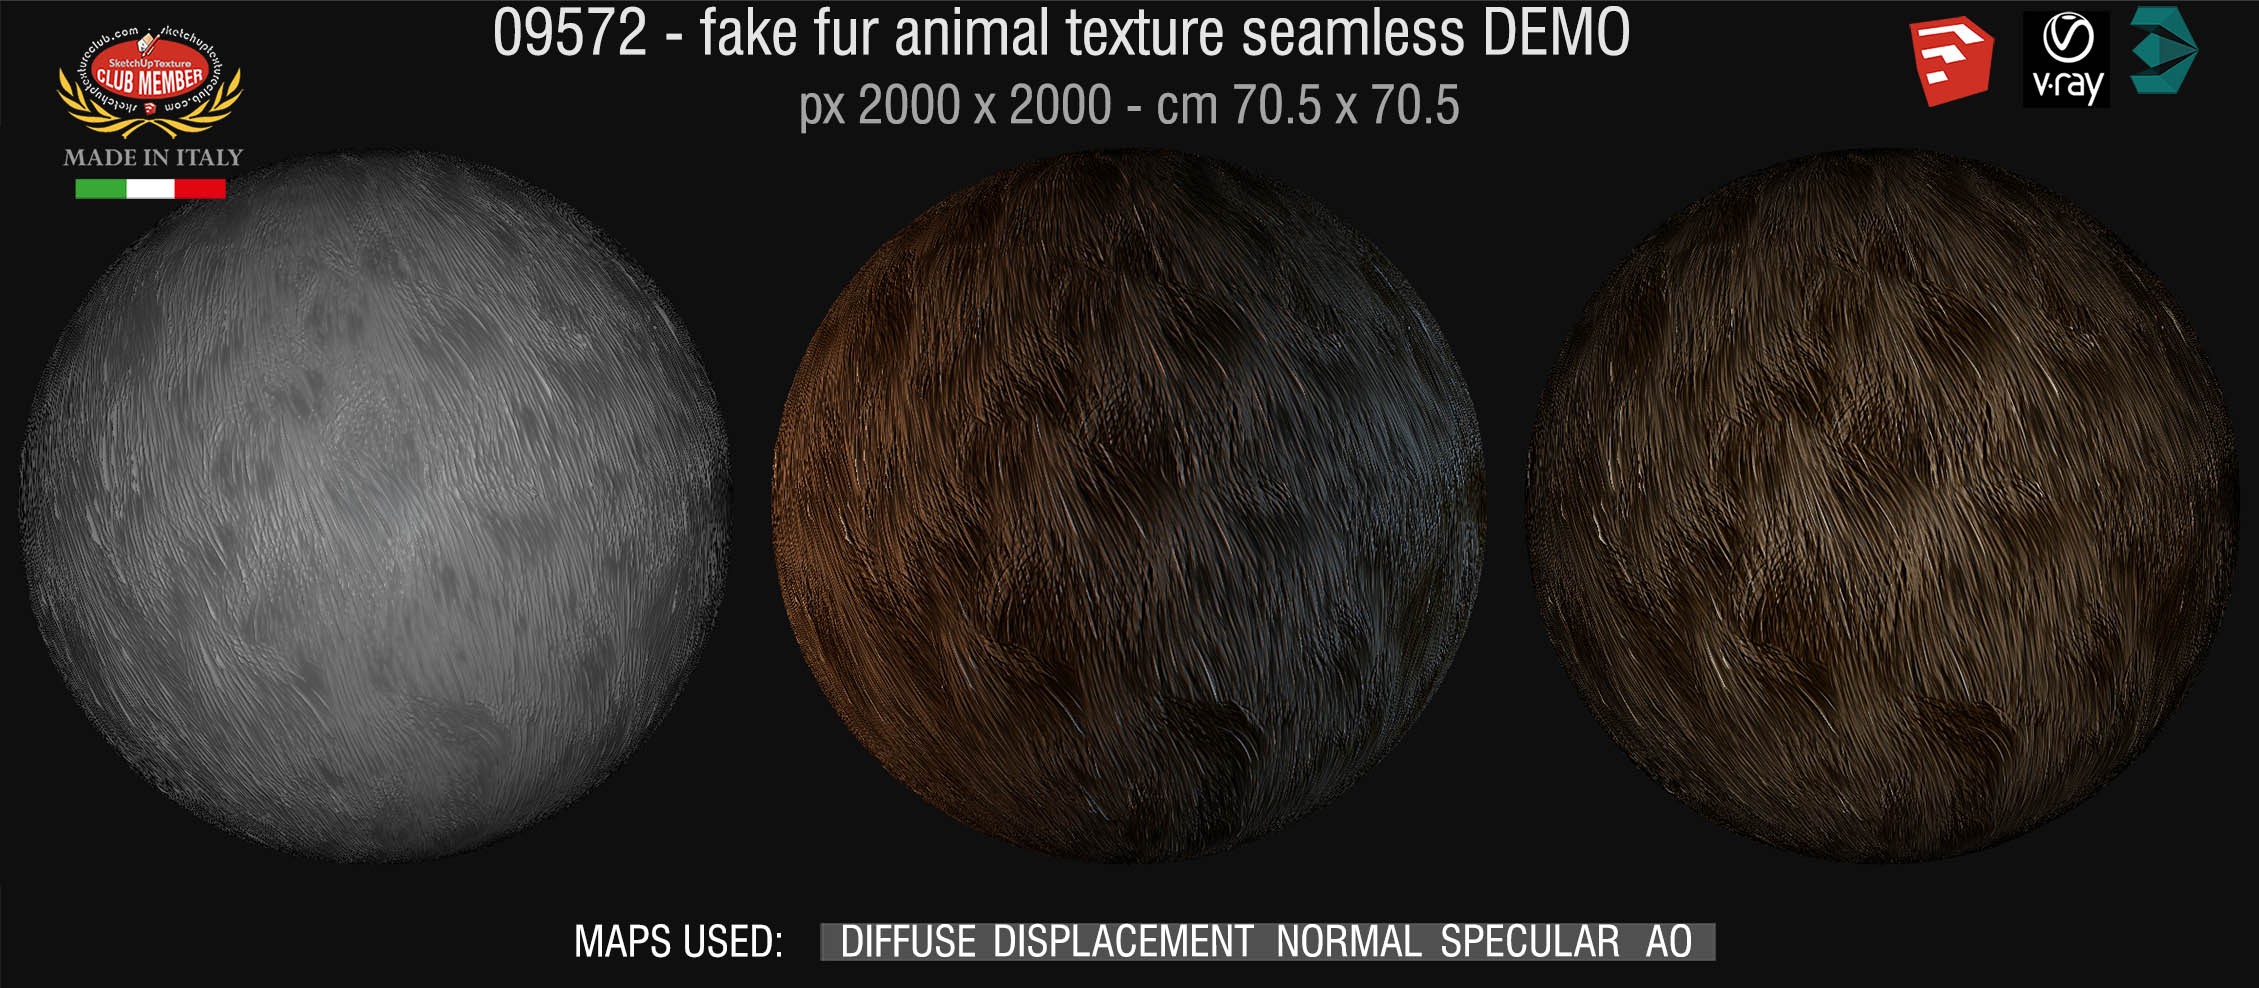 09572 HR fake fur animal texture seamless + maps DEMO